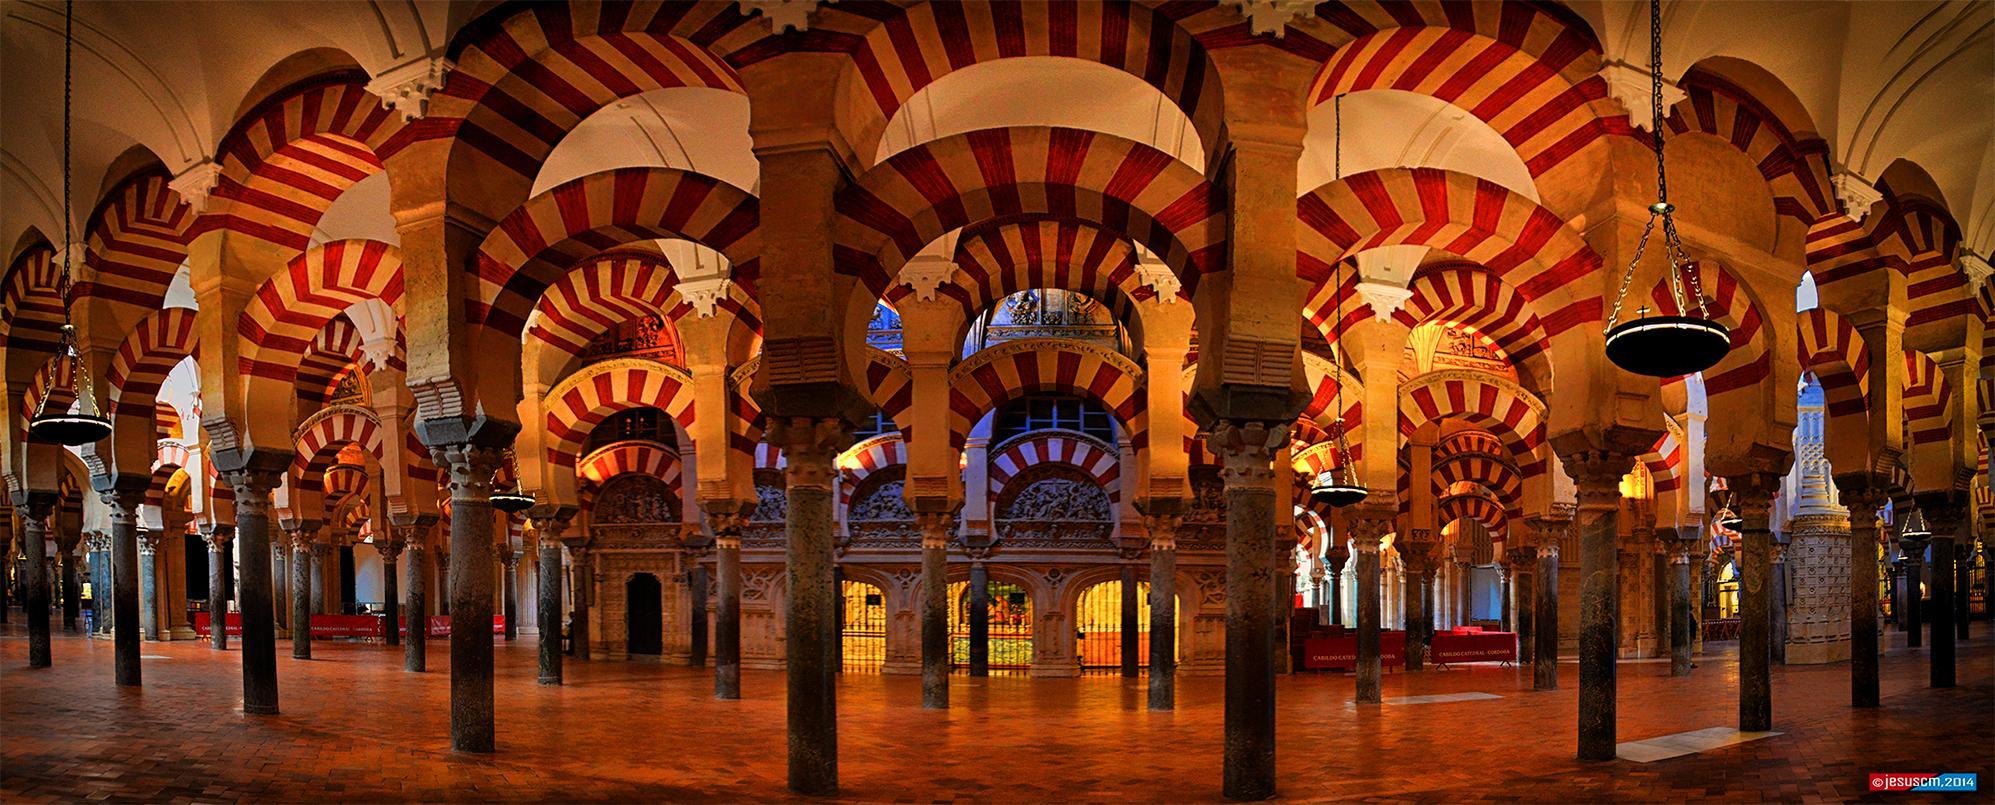 Mosque–Cathedral of Córdoba in Córdoba